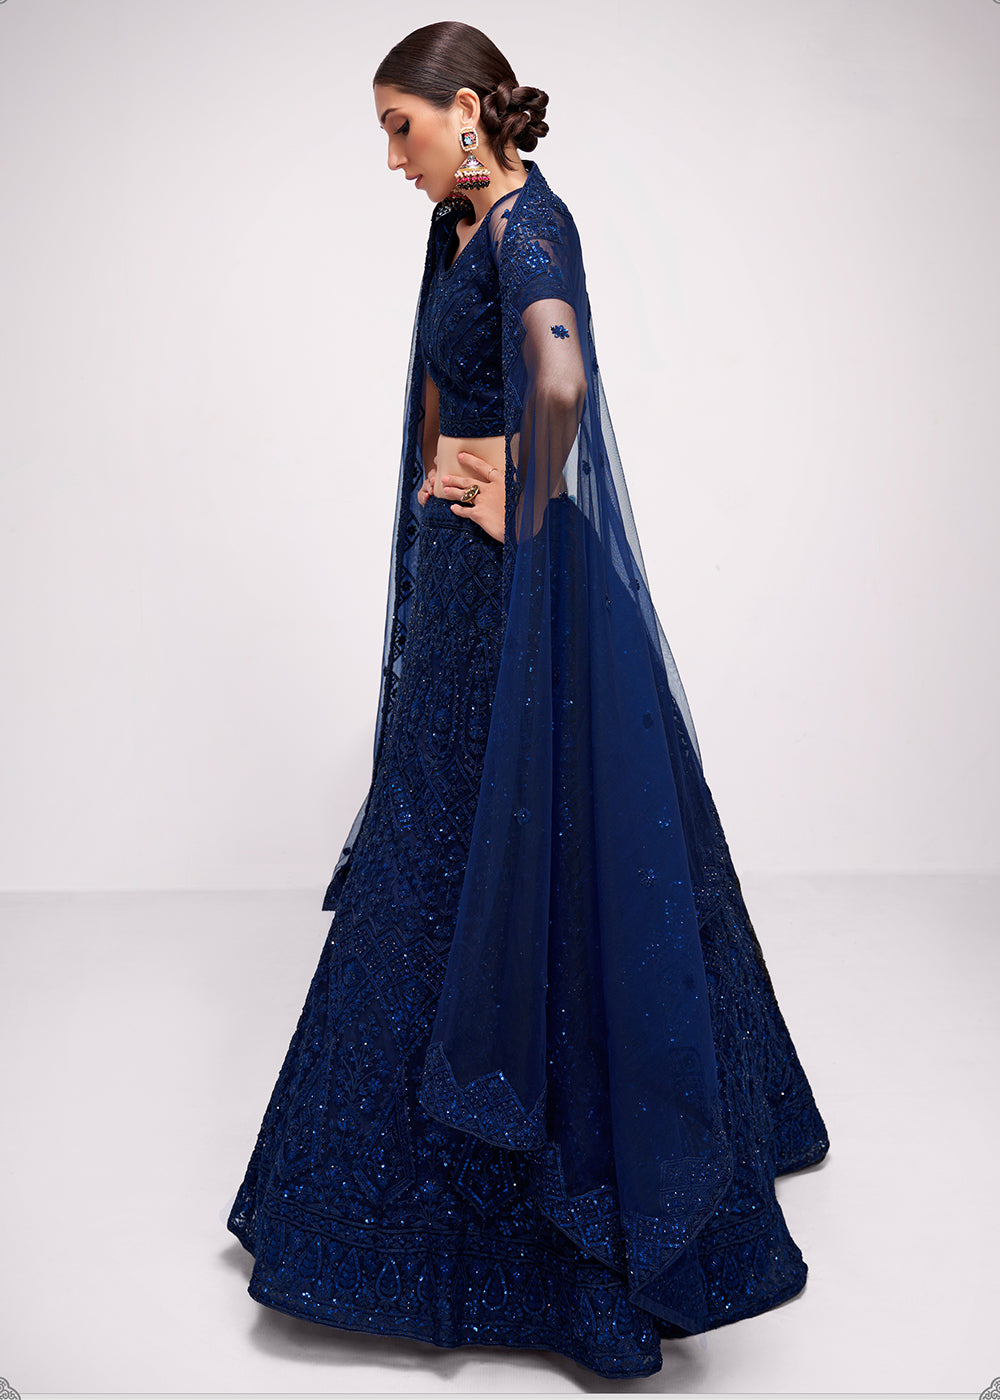 Buy Now Incredible Dark Blue Cording Designer Wedding Bridal Lehenga Choli Online in Canada, UK, USA & Worldwide at Empress Clothing.